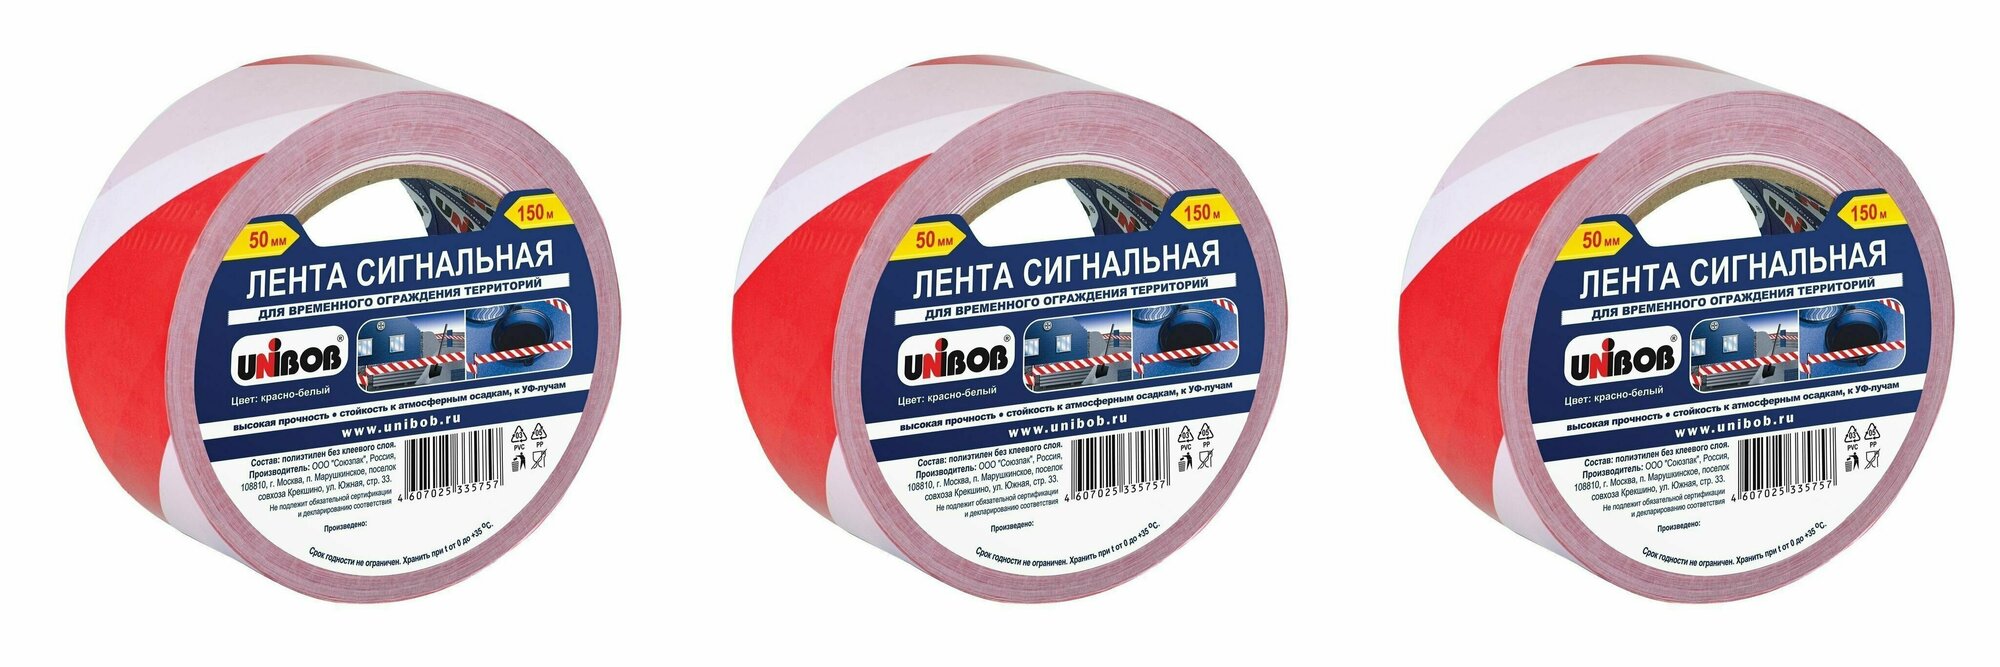 Сигнальная лента Unibob красно-белая 50мм х 150м - фото №1